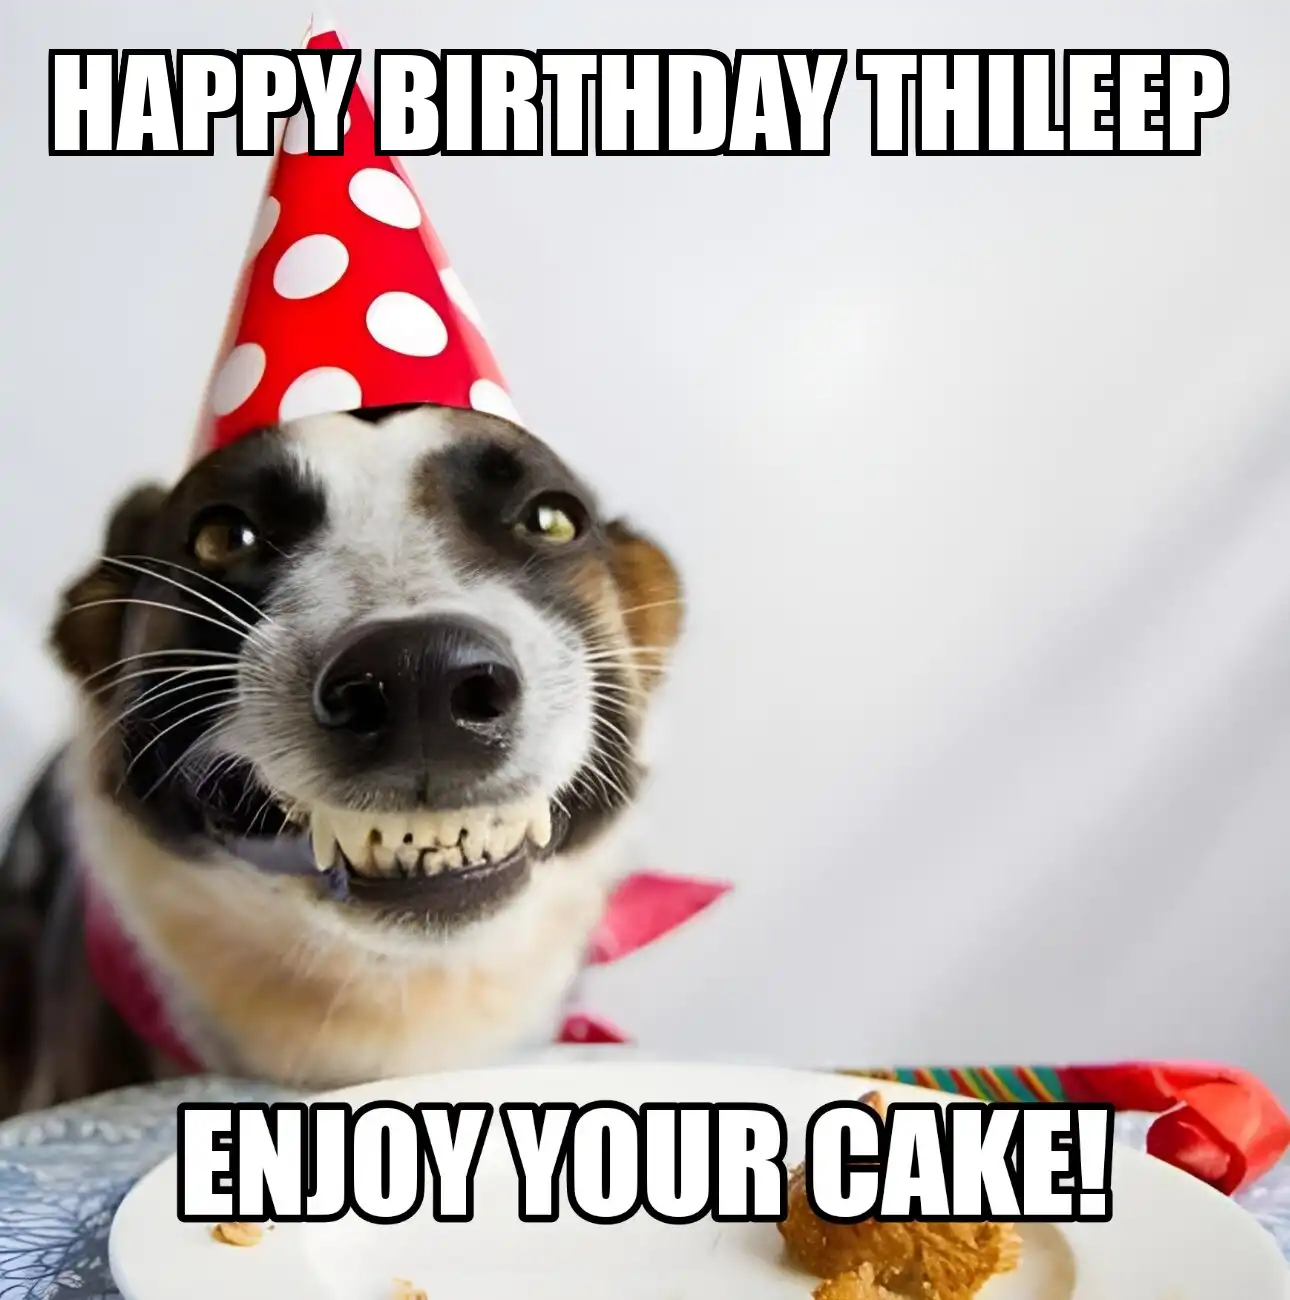 Happy Birthday Thileep Enjoy Your Cake Dog Meme